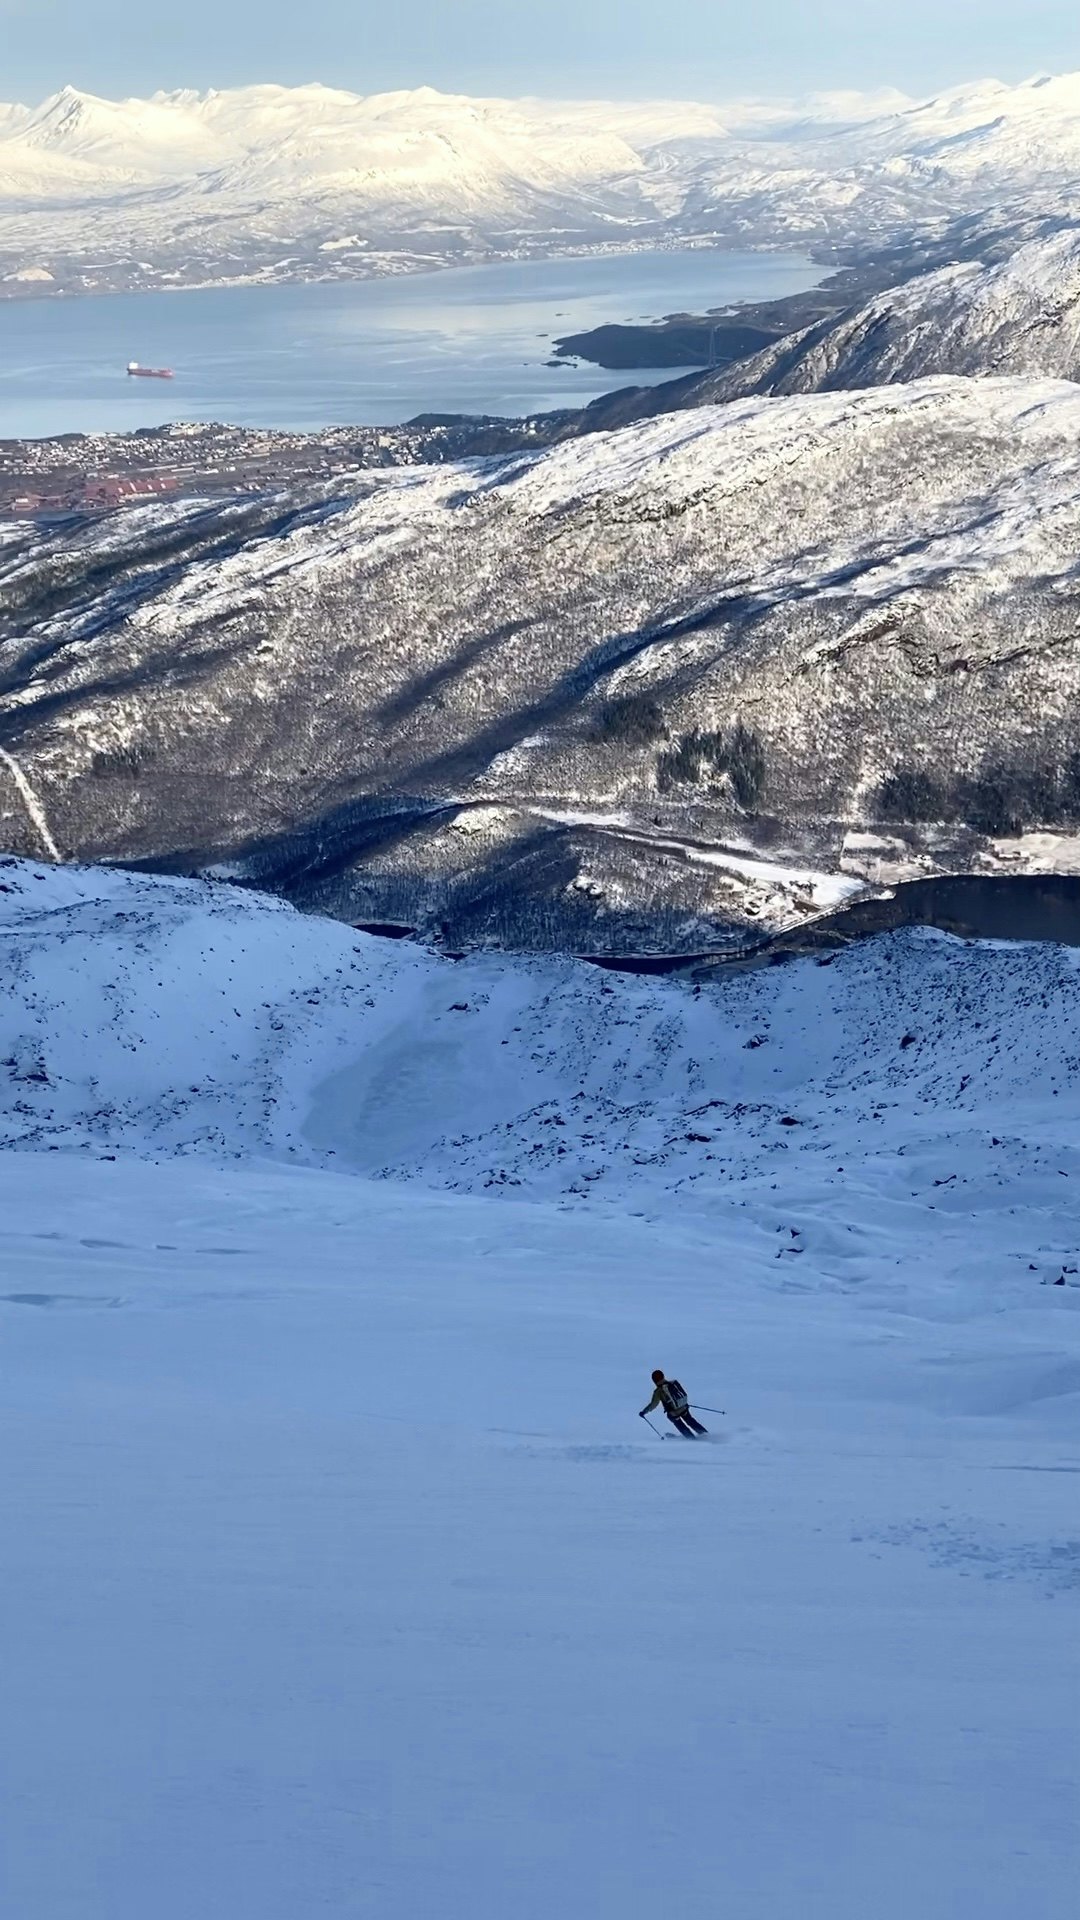 Nedkjøring på breen med Narvik og tilhørende malmbåt i bakgrunnen (det skipes svært mye jernmalm fra den isfrie havnen). Foto: Micke af Ekenstam